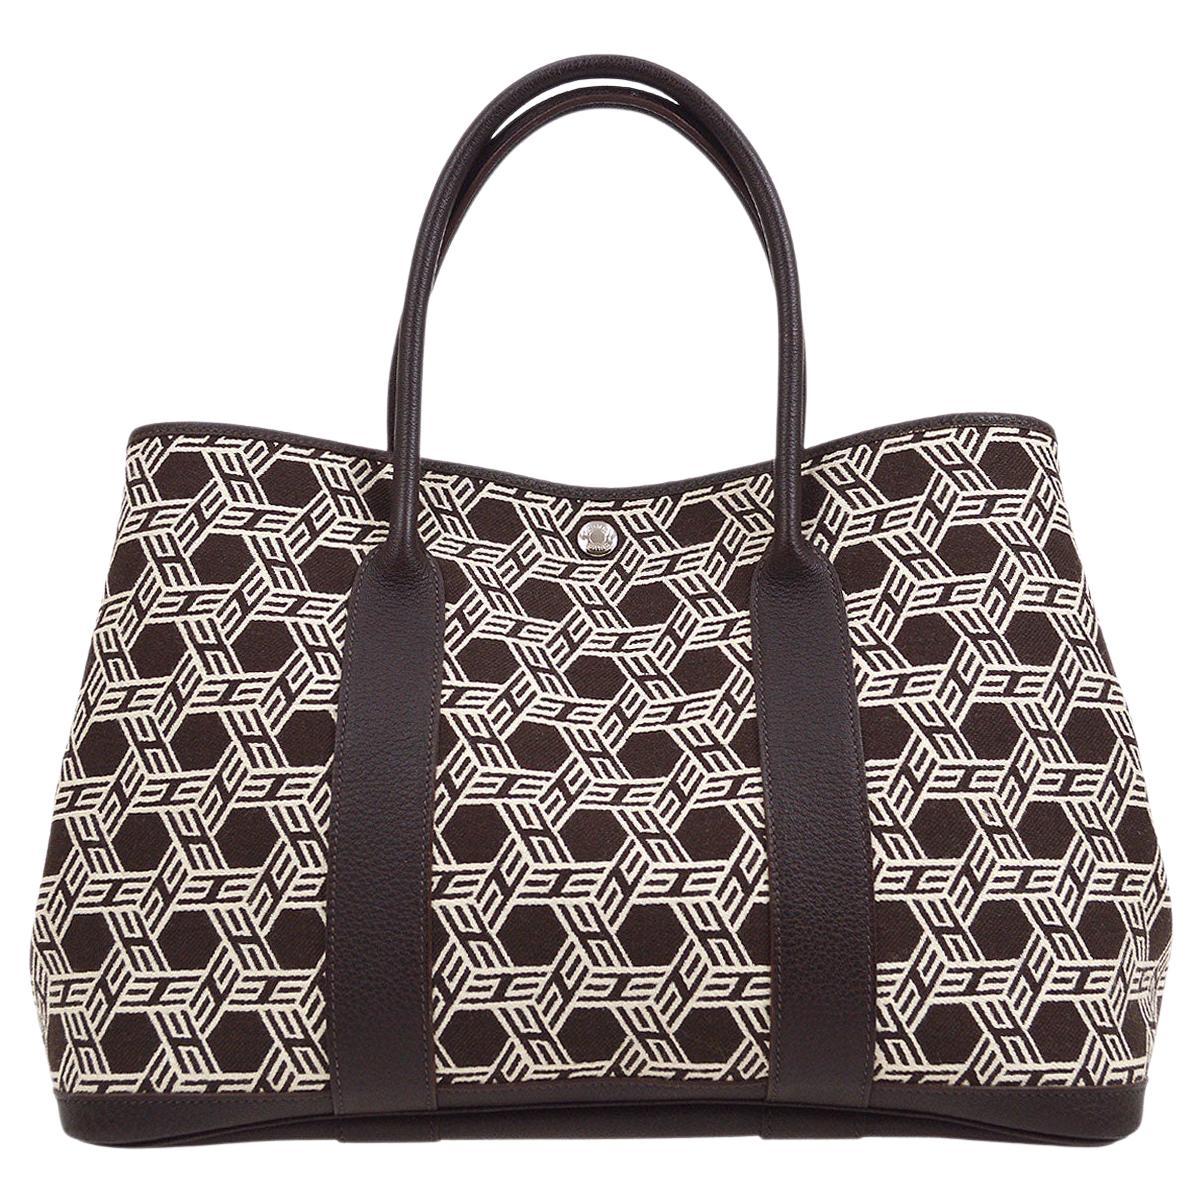 Hermès Birkin 35 Handbag